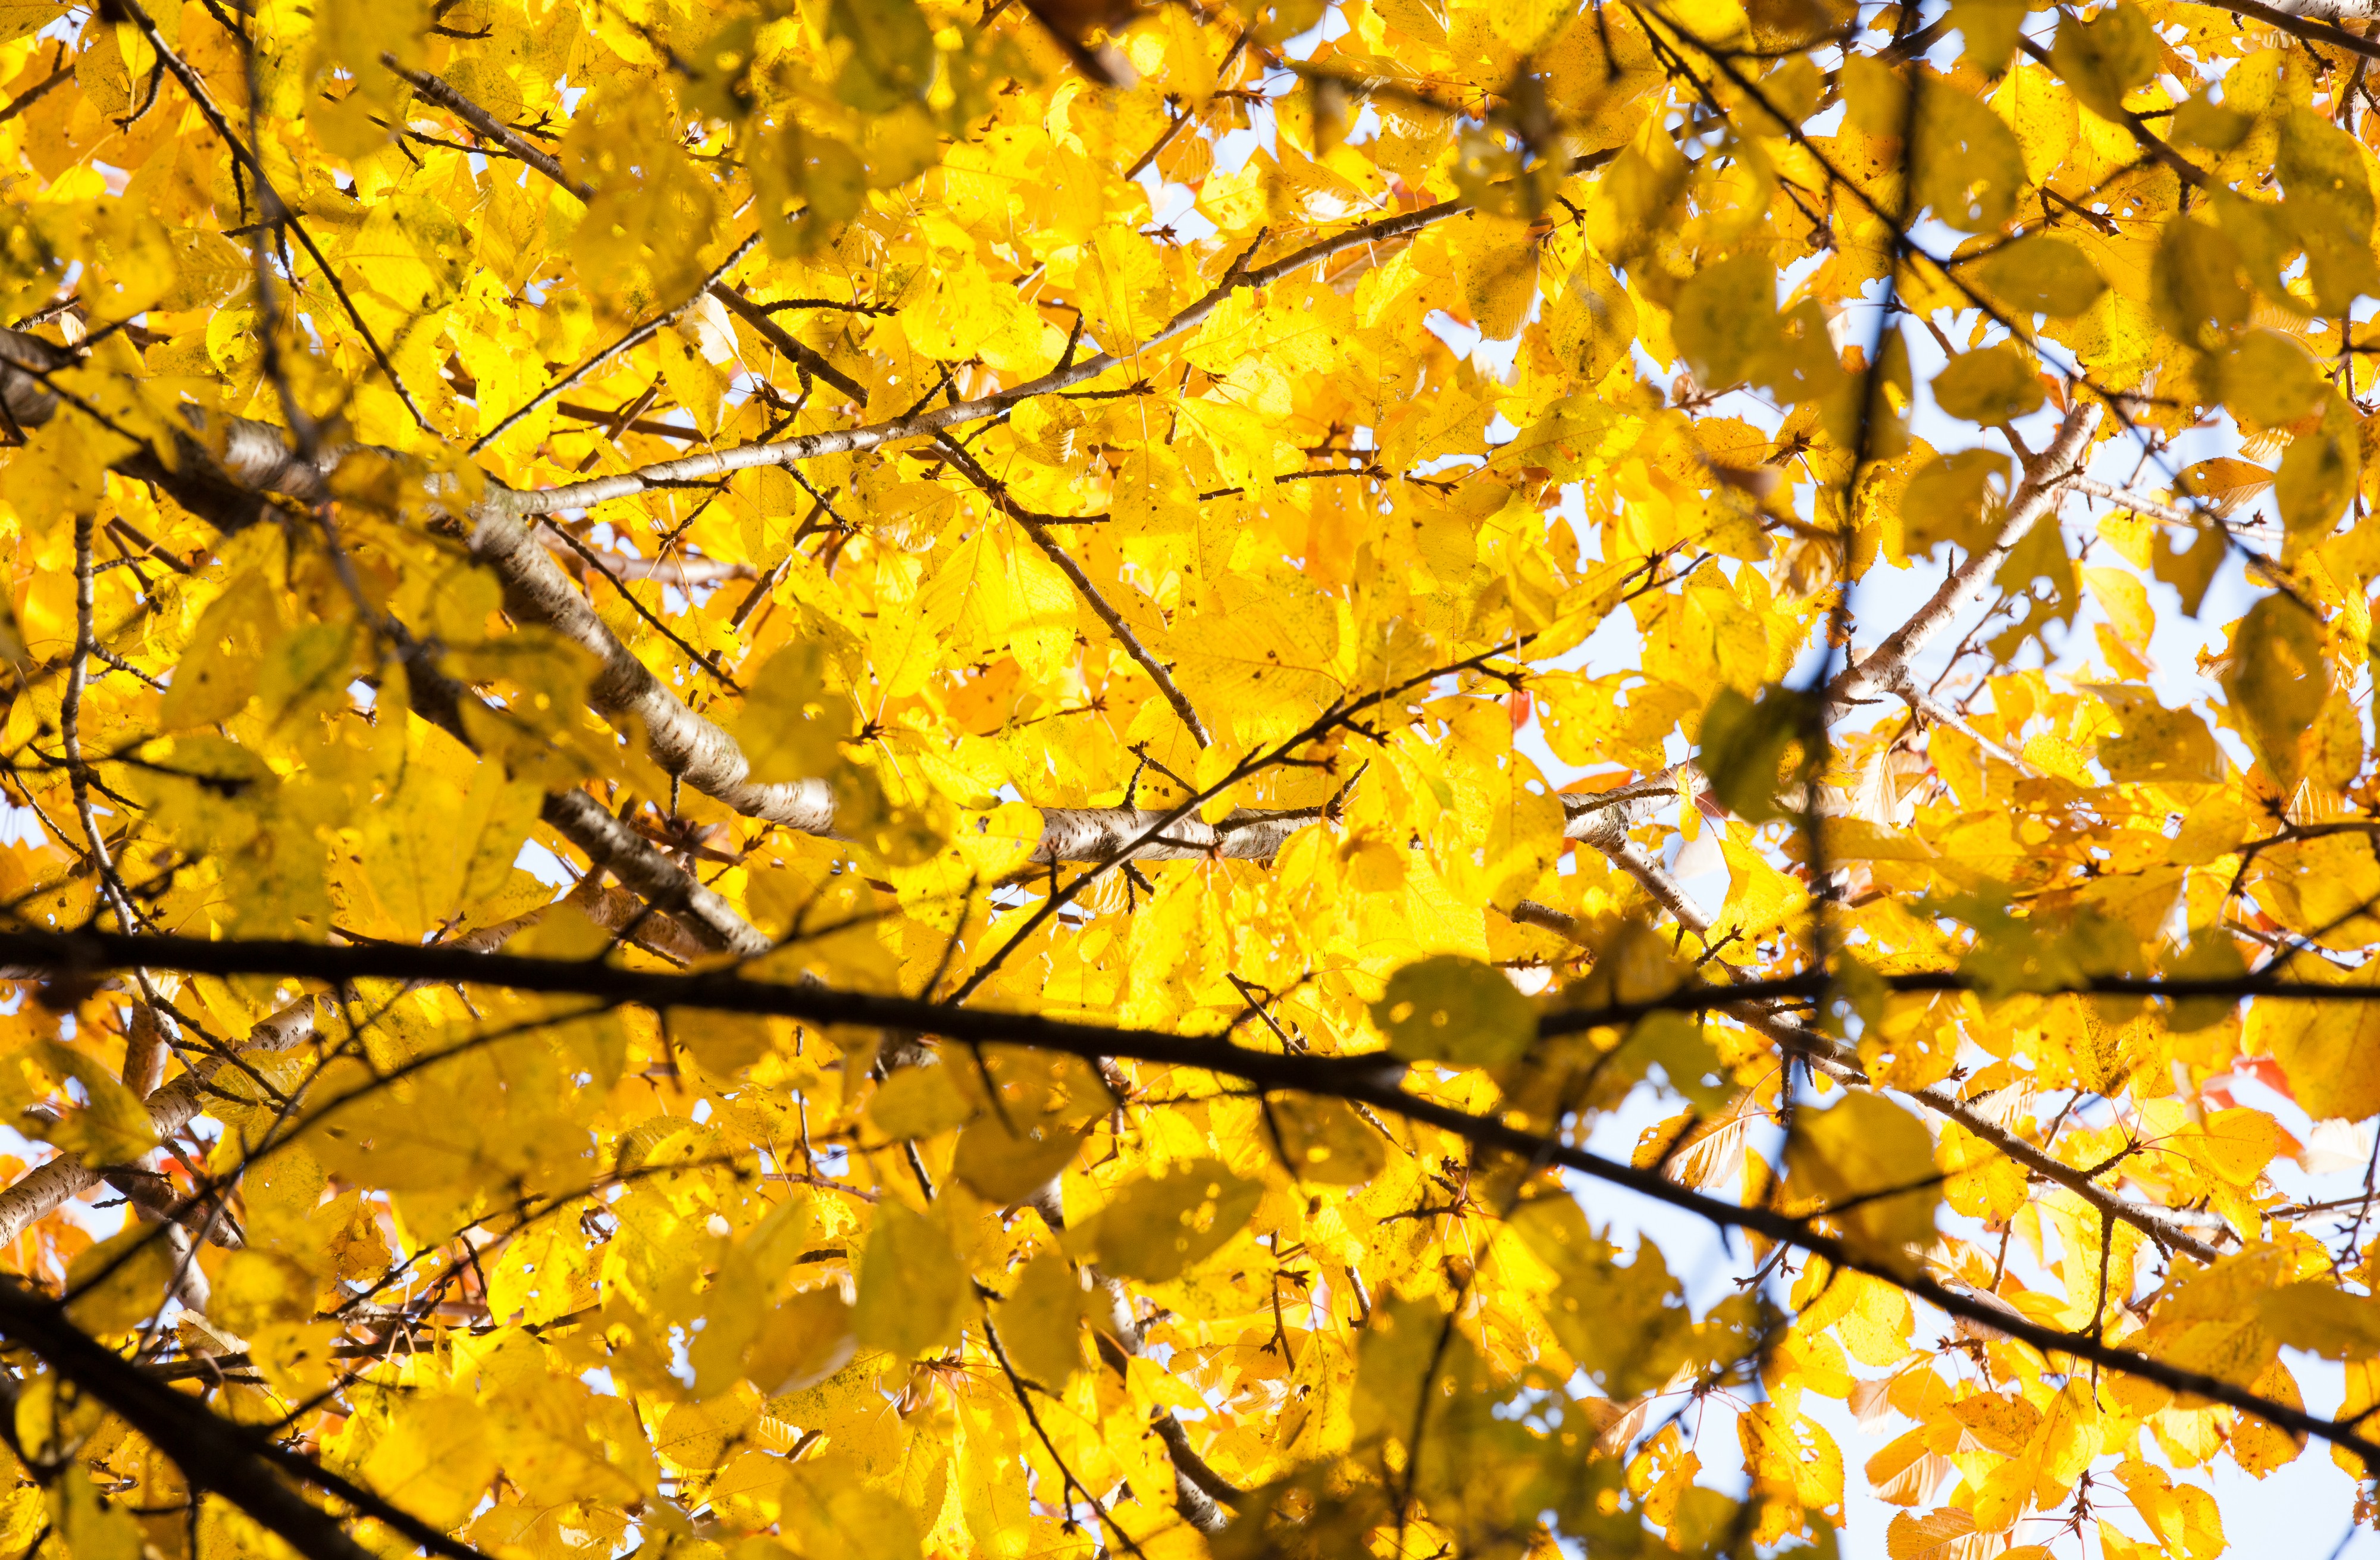 golden tree leaves in October 2013